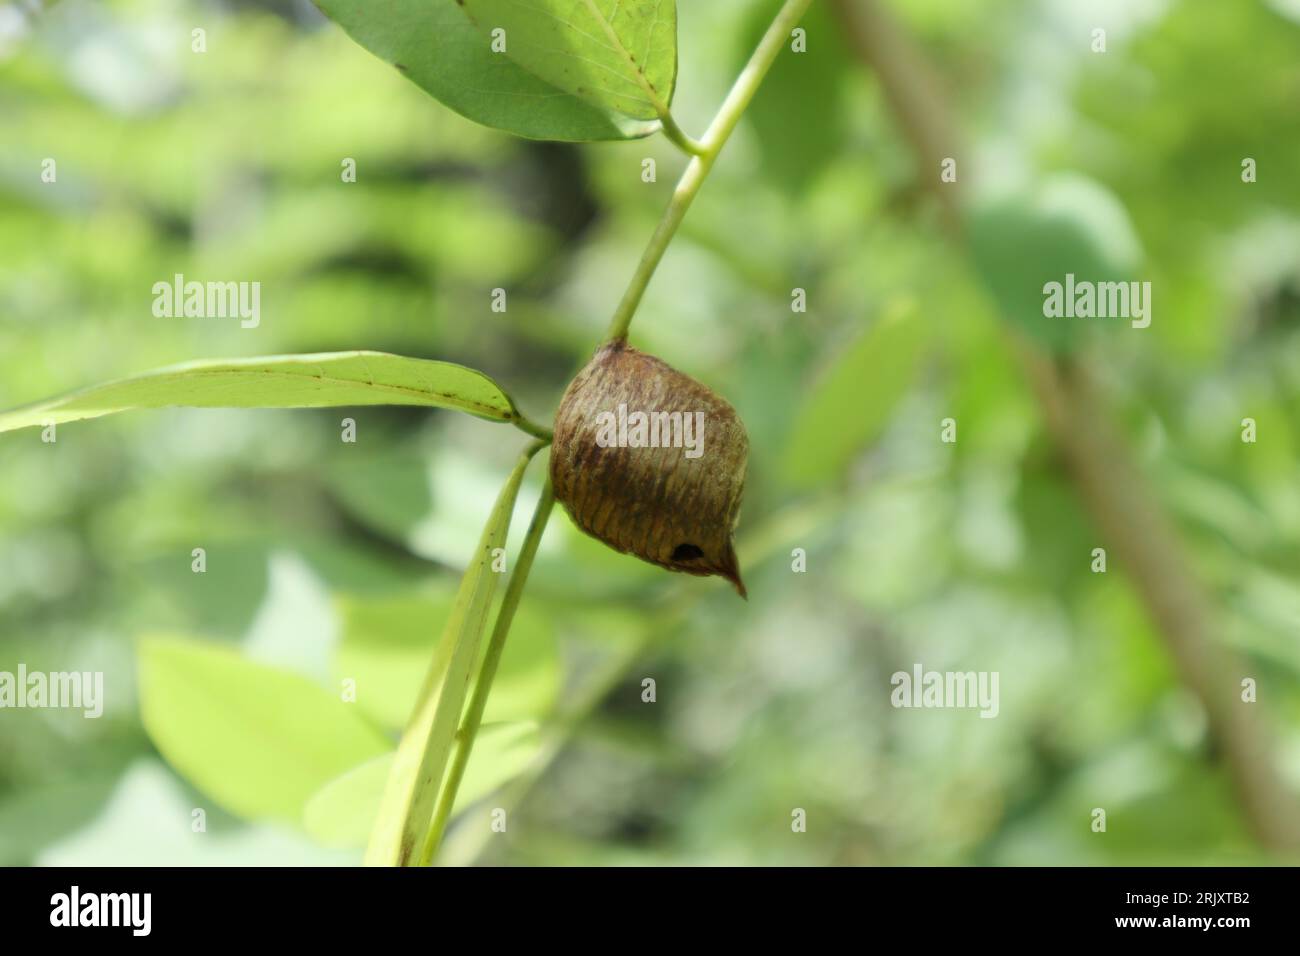 Close up view of a praying mantis ootheca (egg case) on a leaf stalk of a Gliricidia (Gliricidia Sepium) plant. Stock Photo